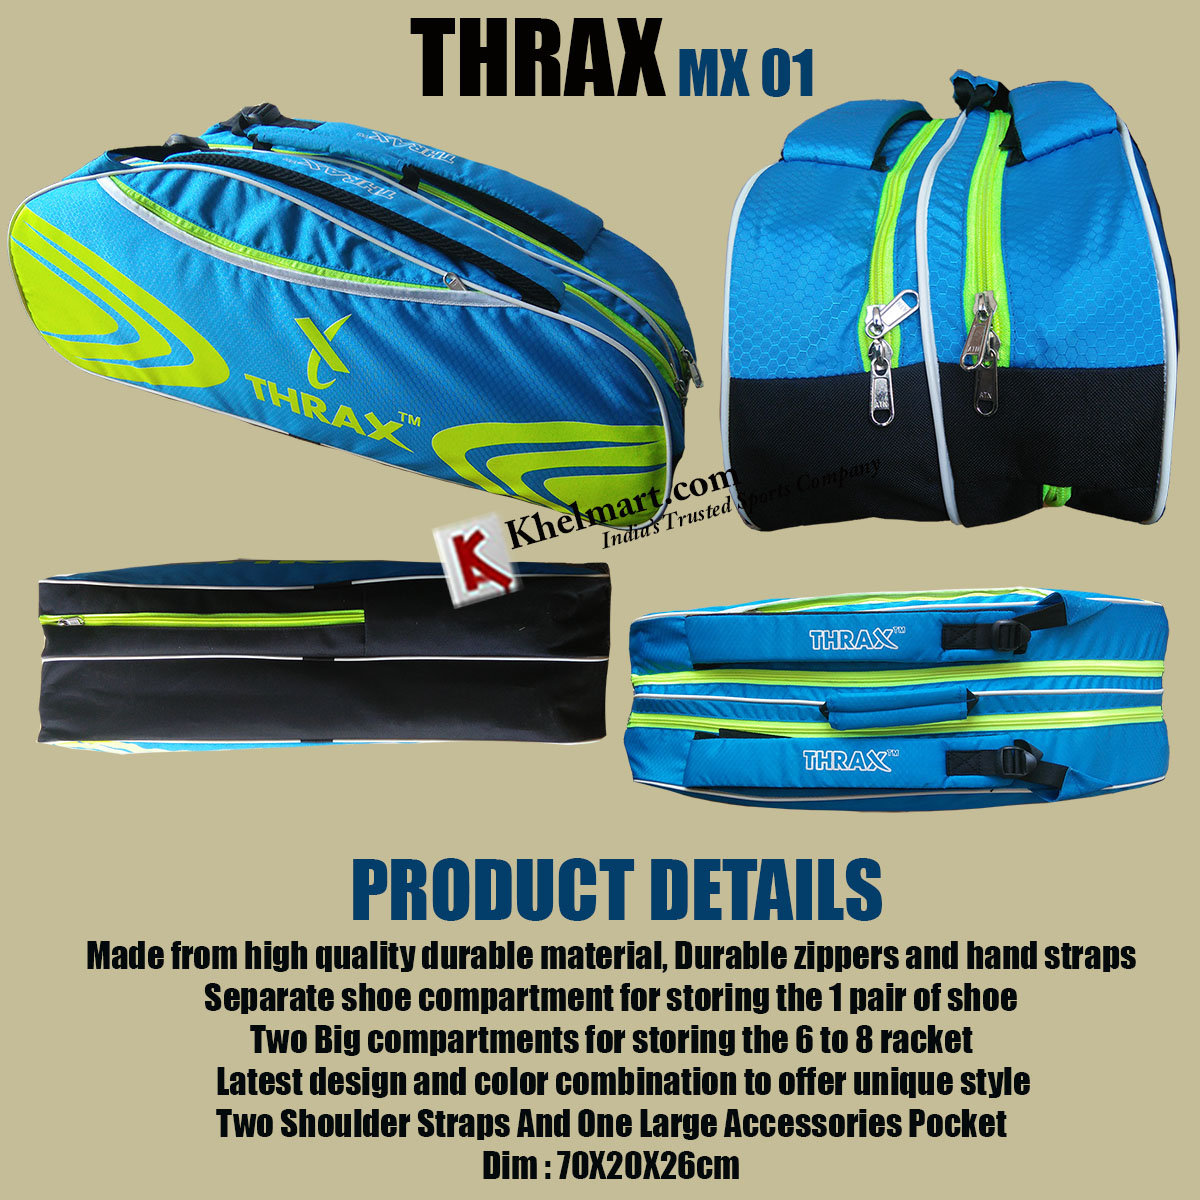 Thrax_MX_01_Badminton_kit_Bag.jpg